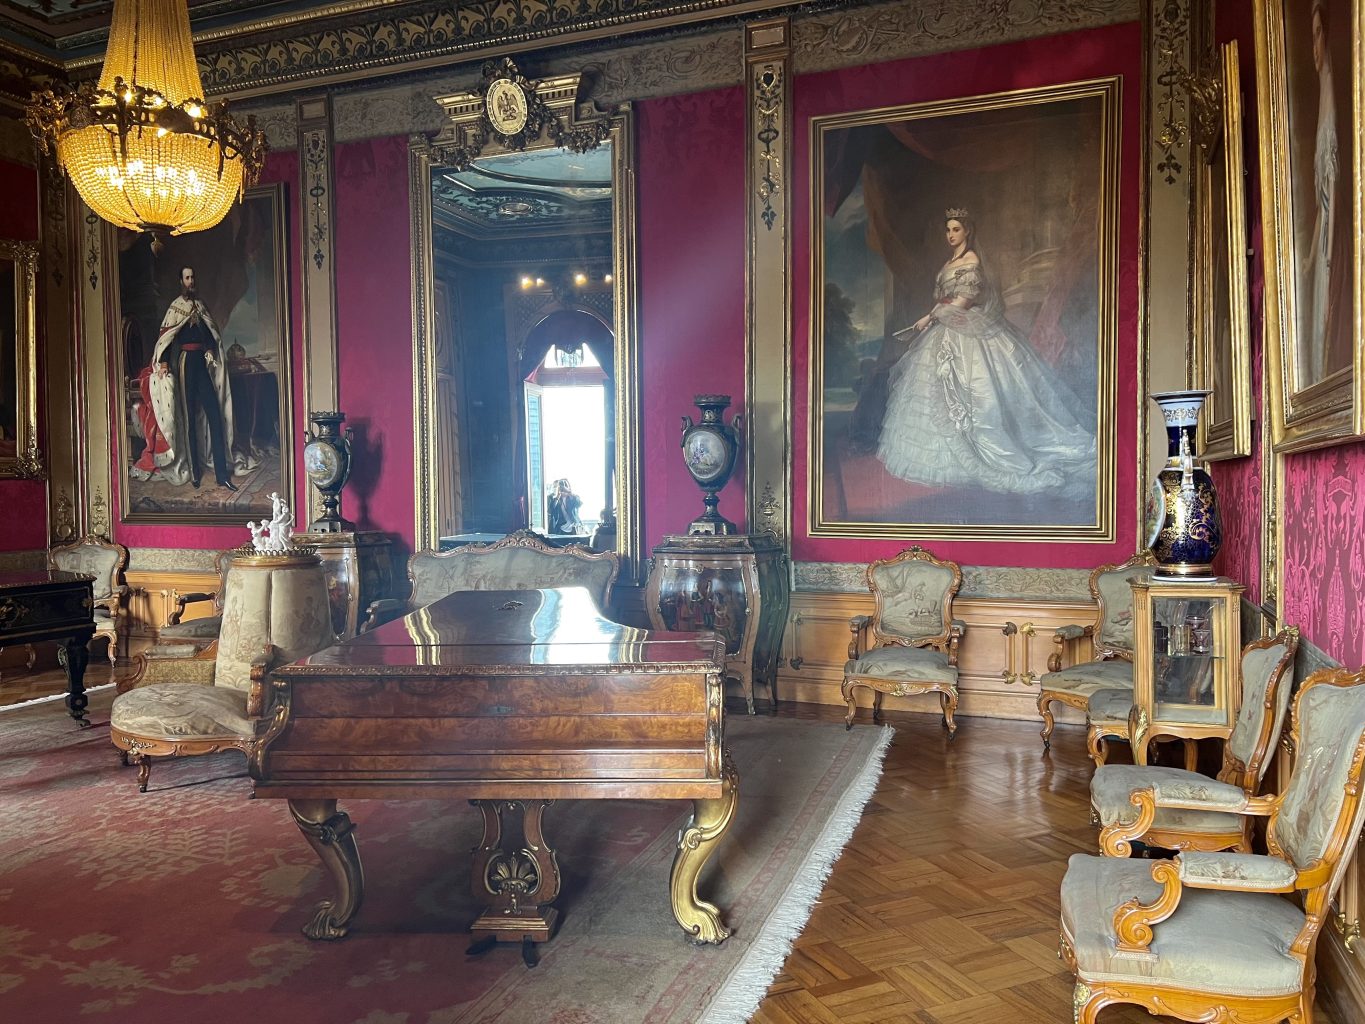 habitación con ornamentación clásica europea del siglo XIX.